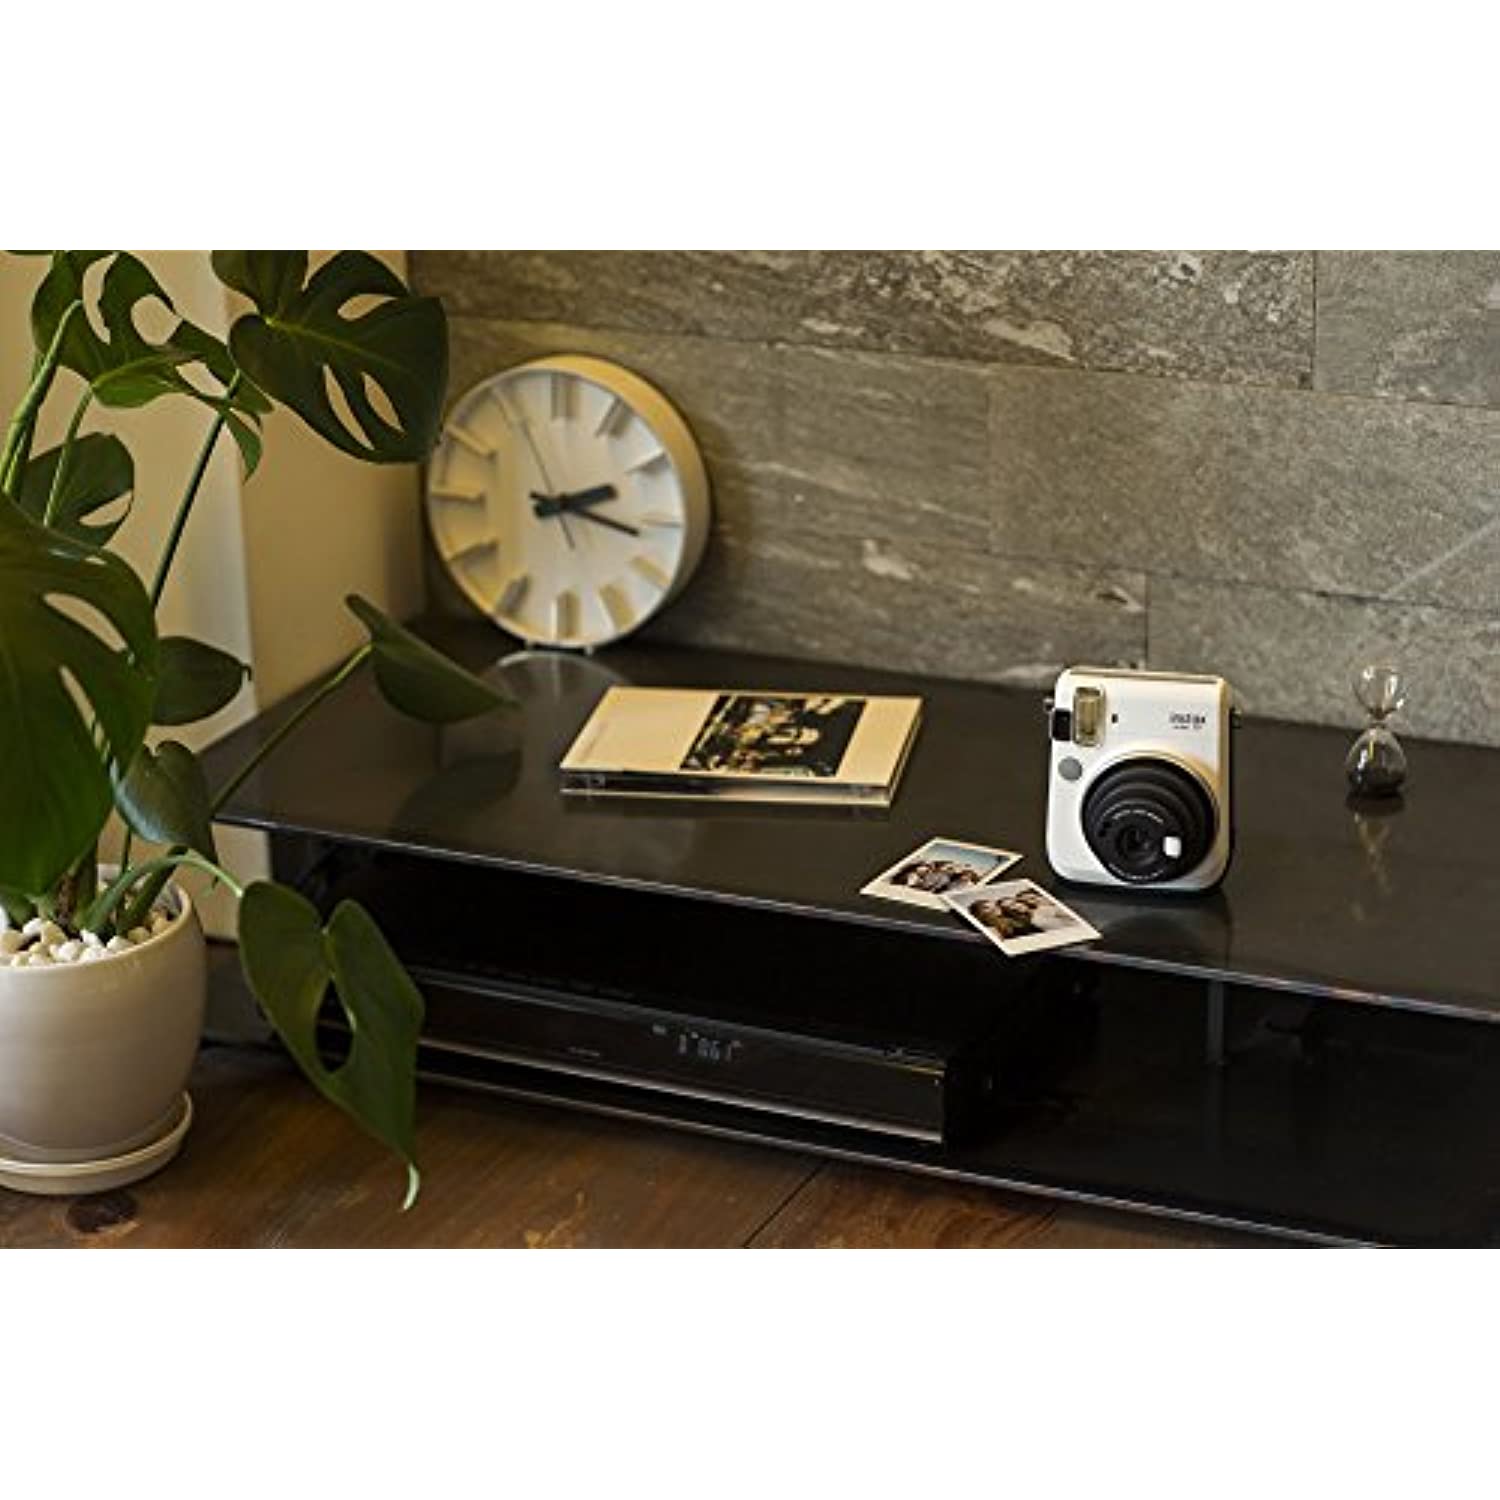 Fujifilm Instax Mini 70 - Instant Film Camera (White) (Renewed)